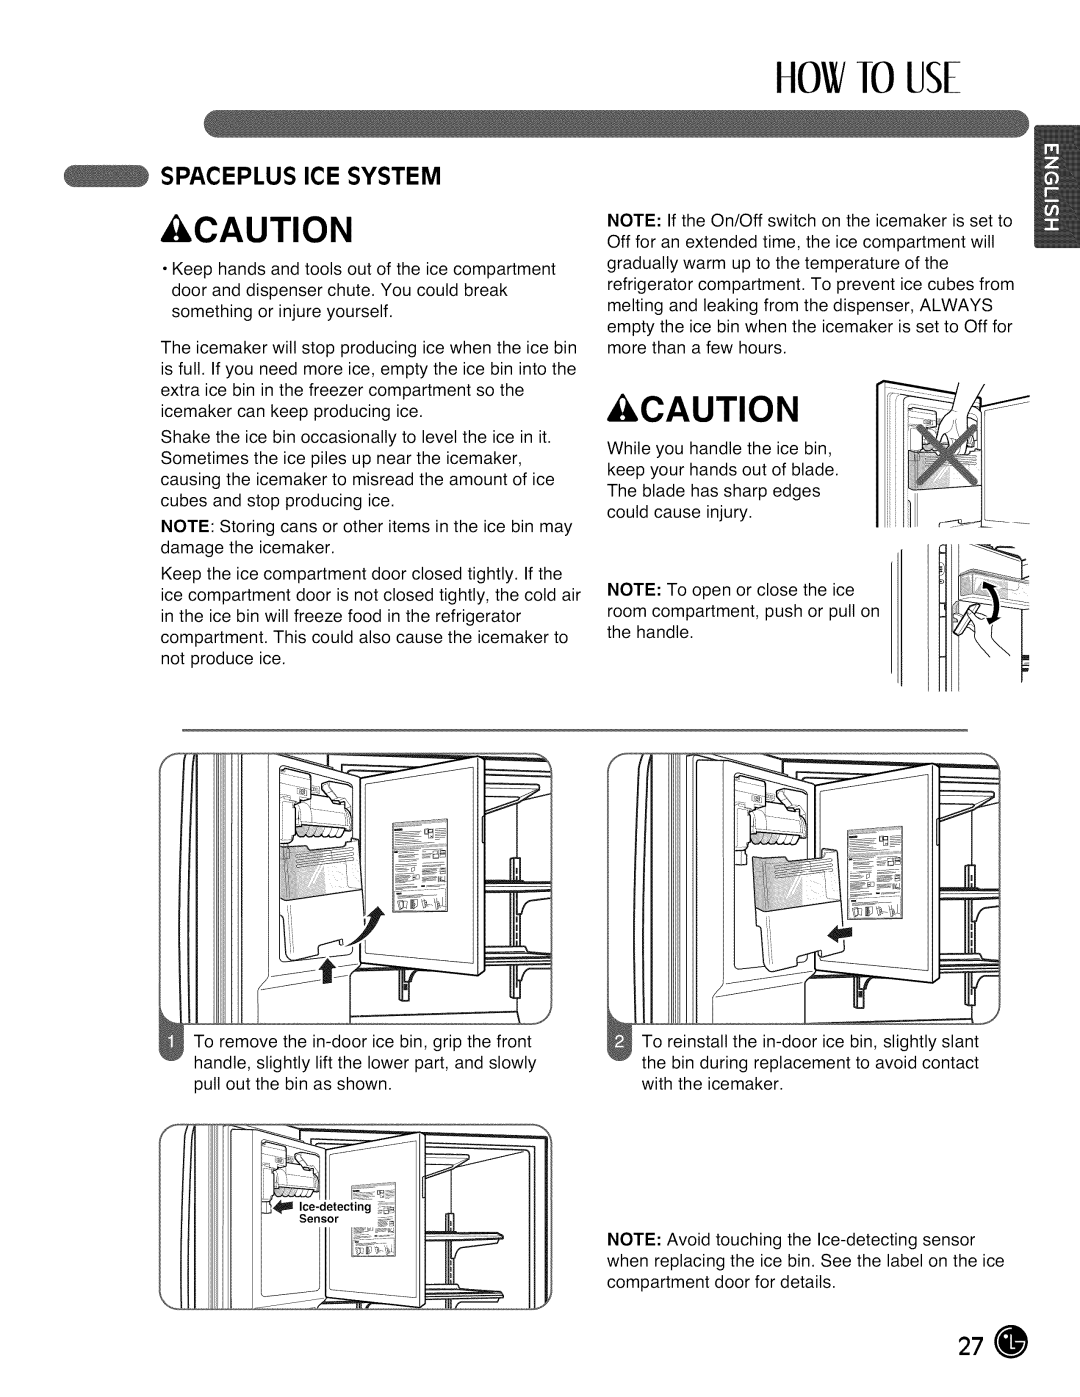 LG Electronics LMX28988 manual Spaceplus Ice System, ttOWlO USE, Caution 